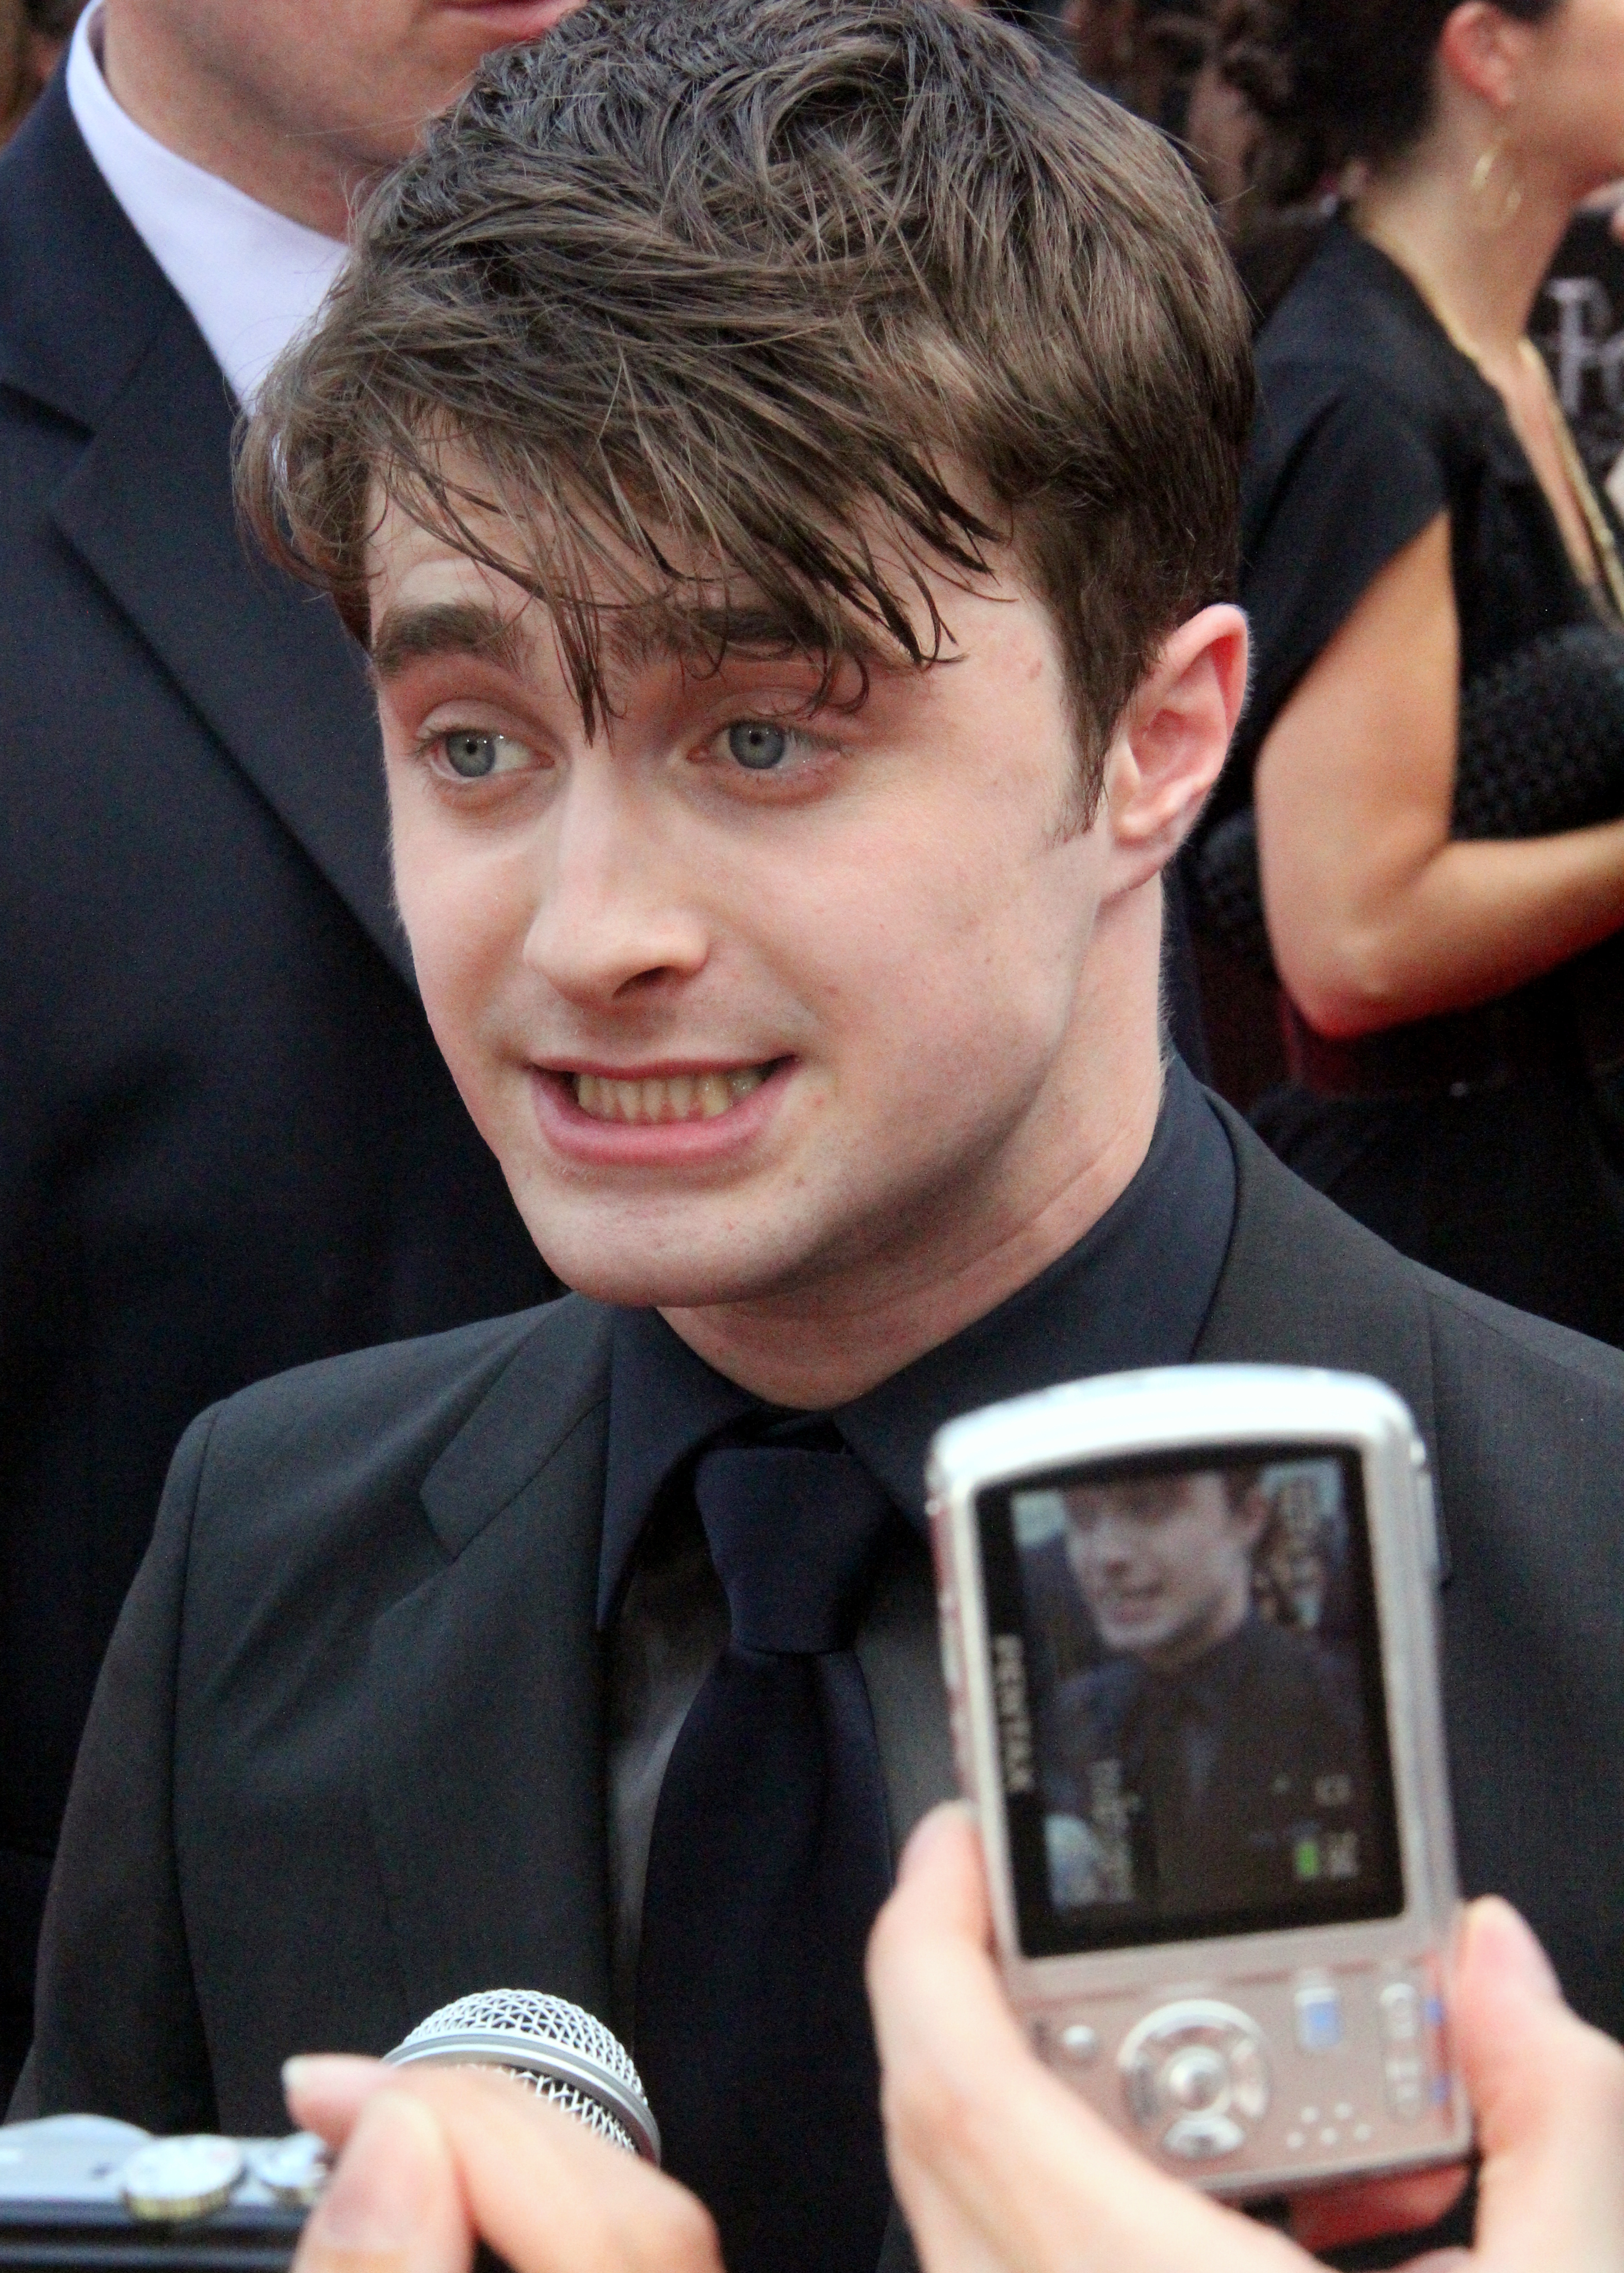 Daniel Radcliffe photo #102526, Daniel Radcliffe image